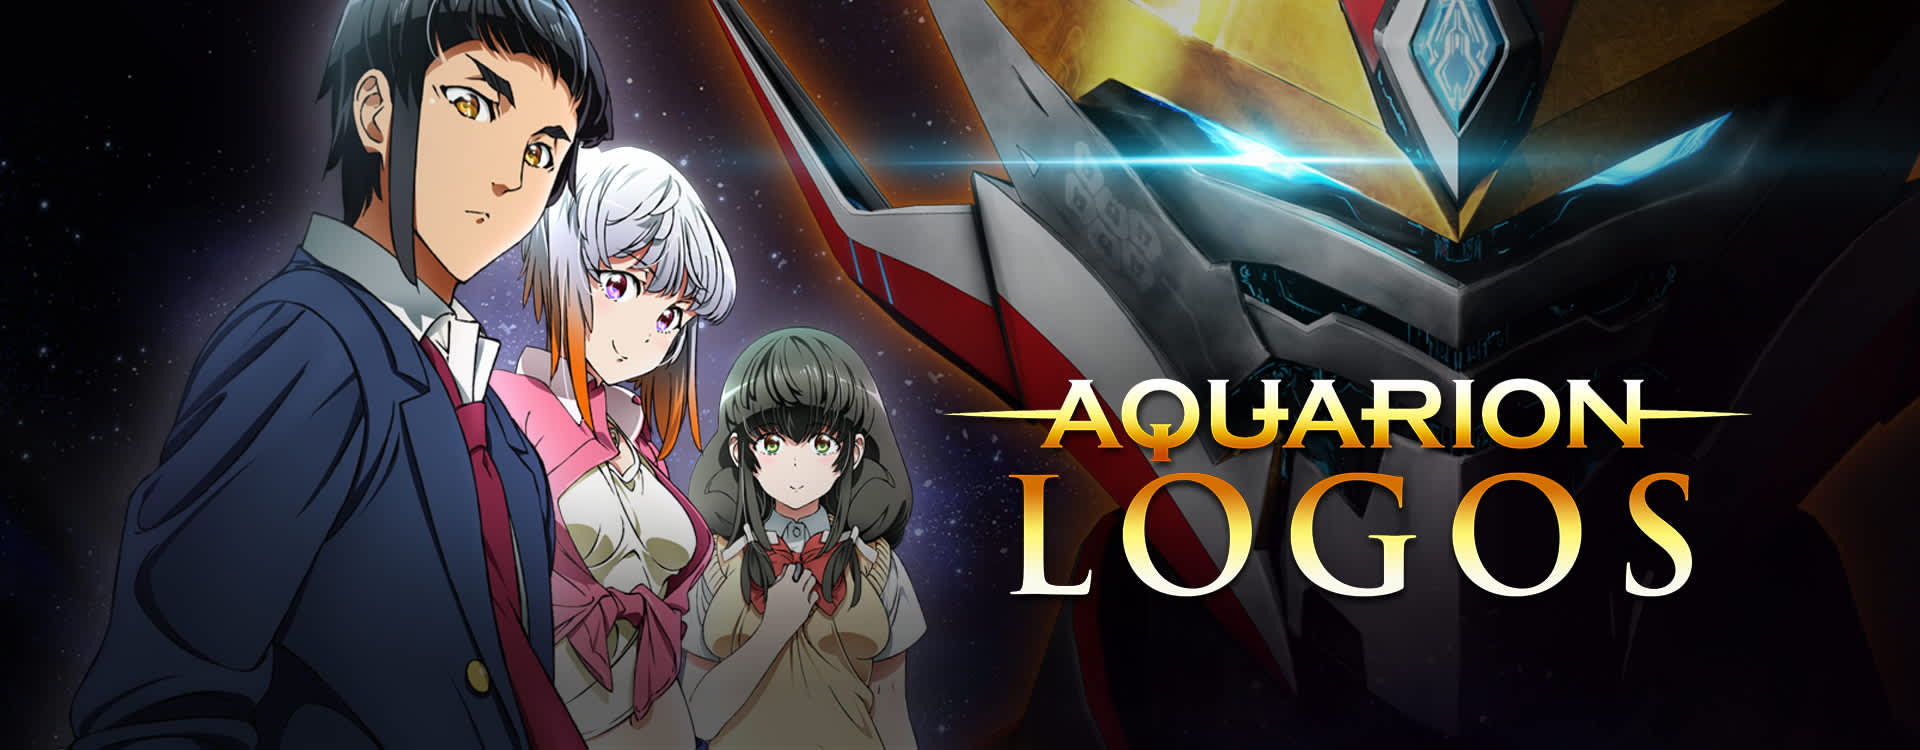 watch aquarion anime